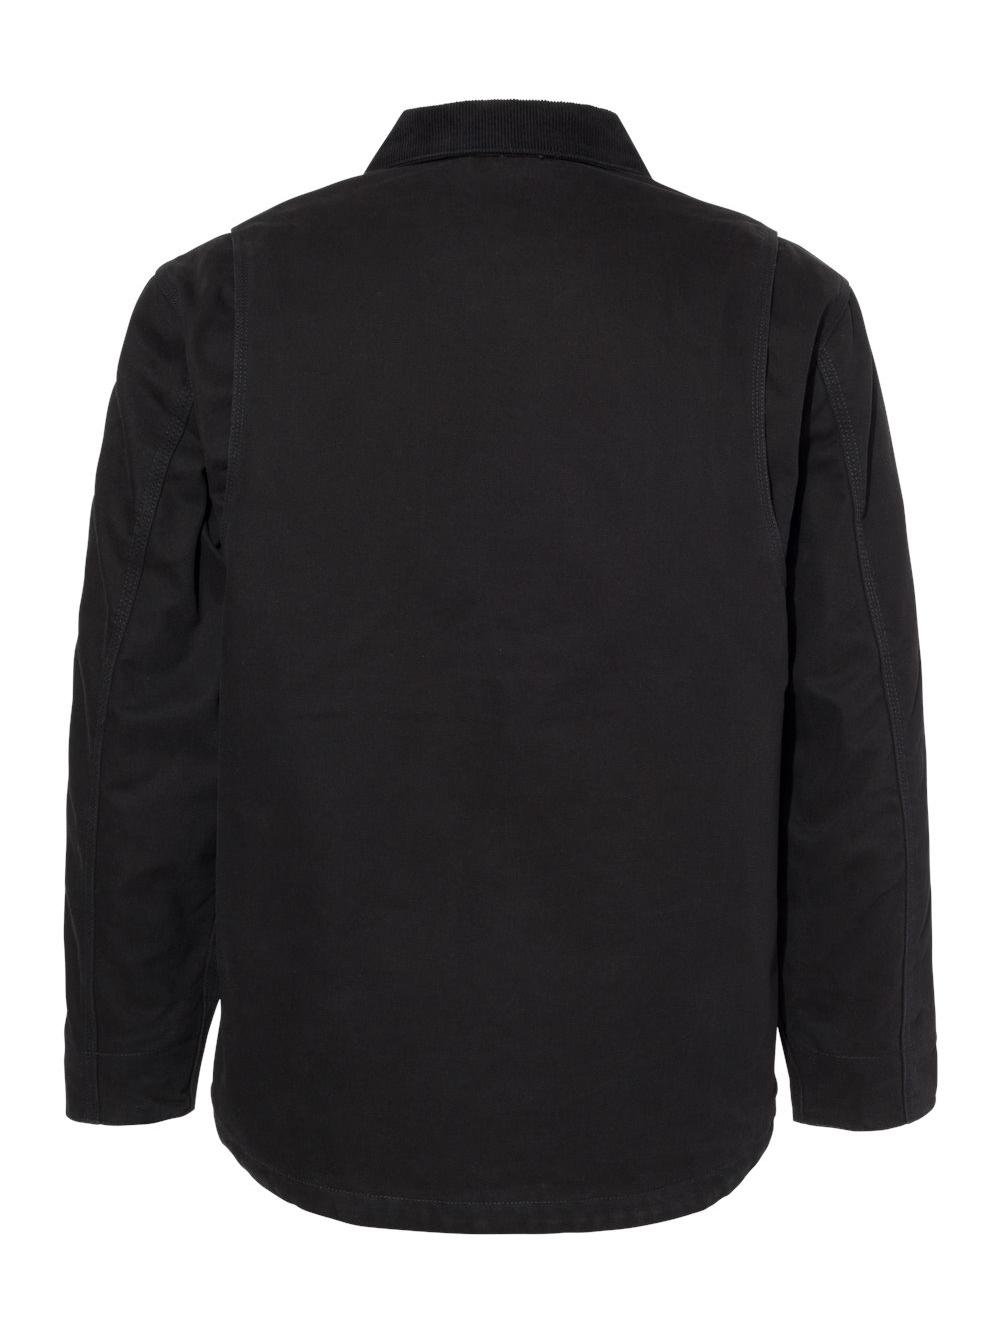 DRI DUCK Rambler Boulder Cloth Jacket - image 3 of 3